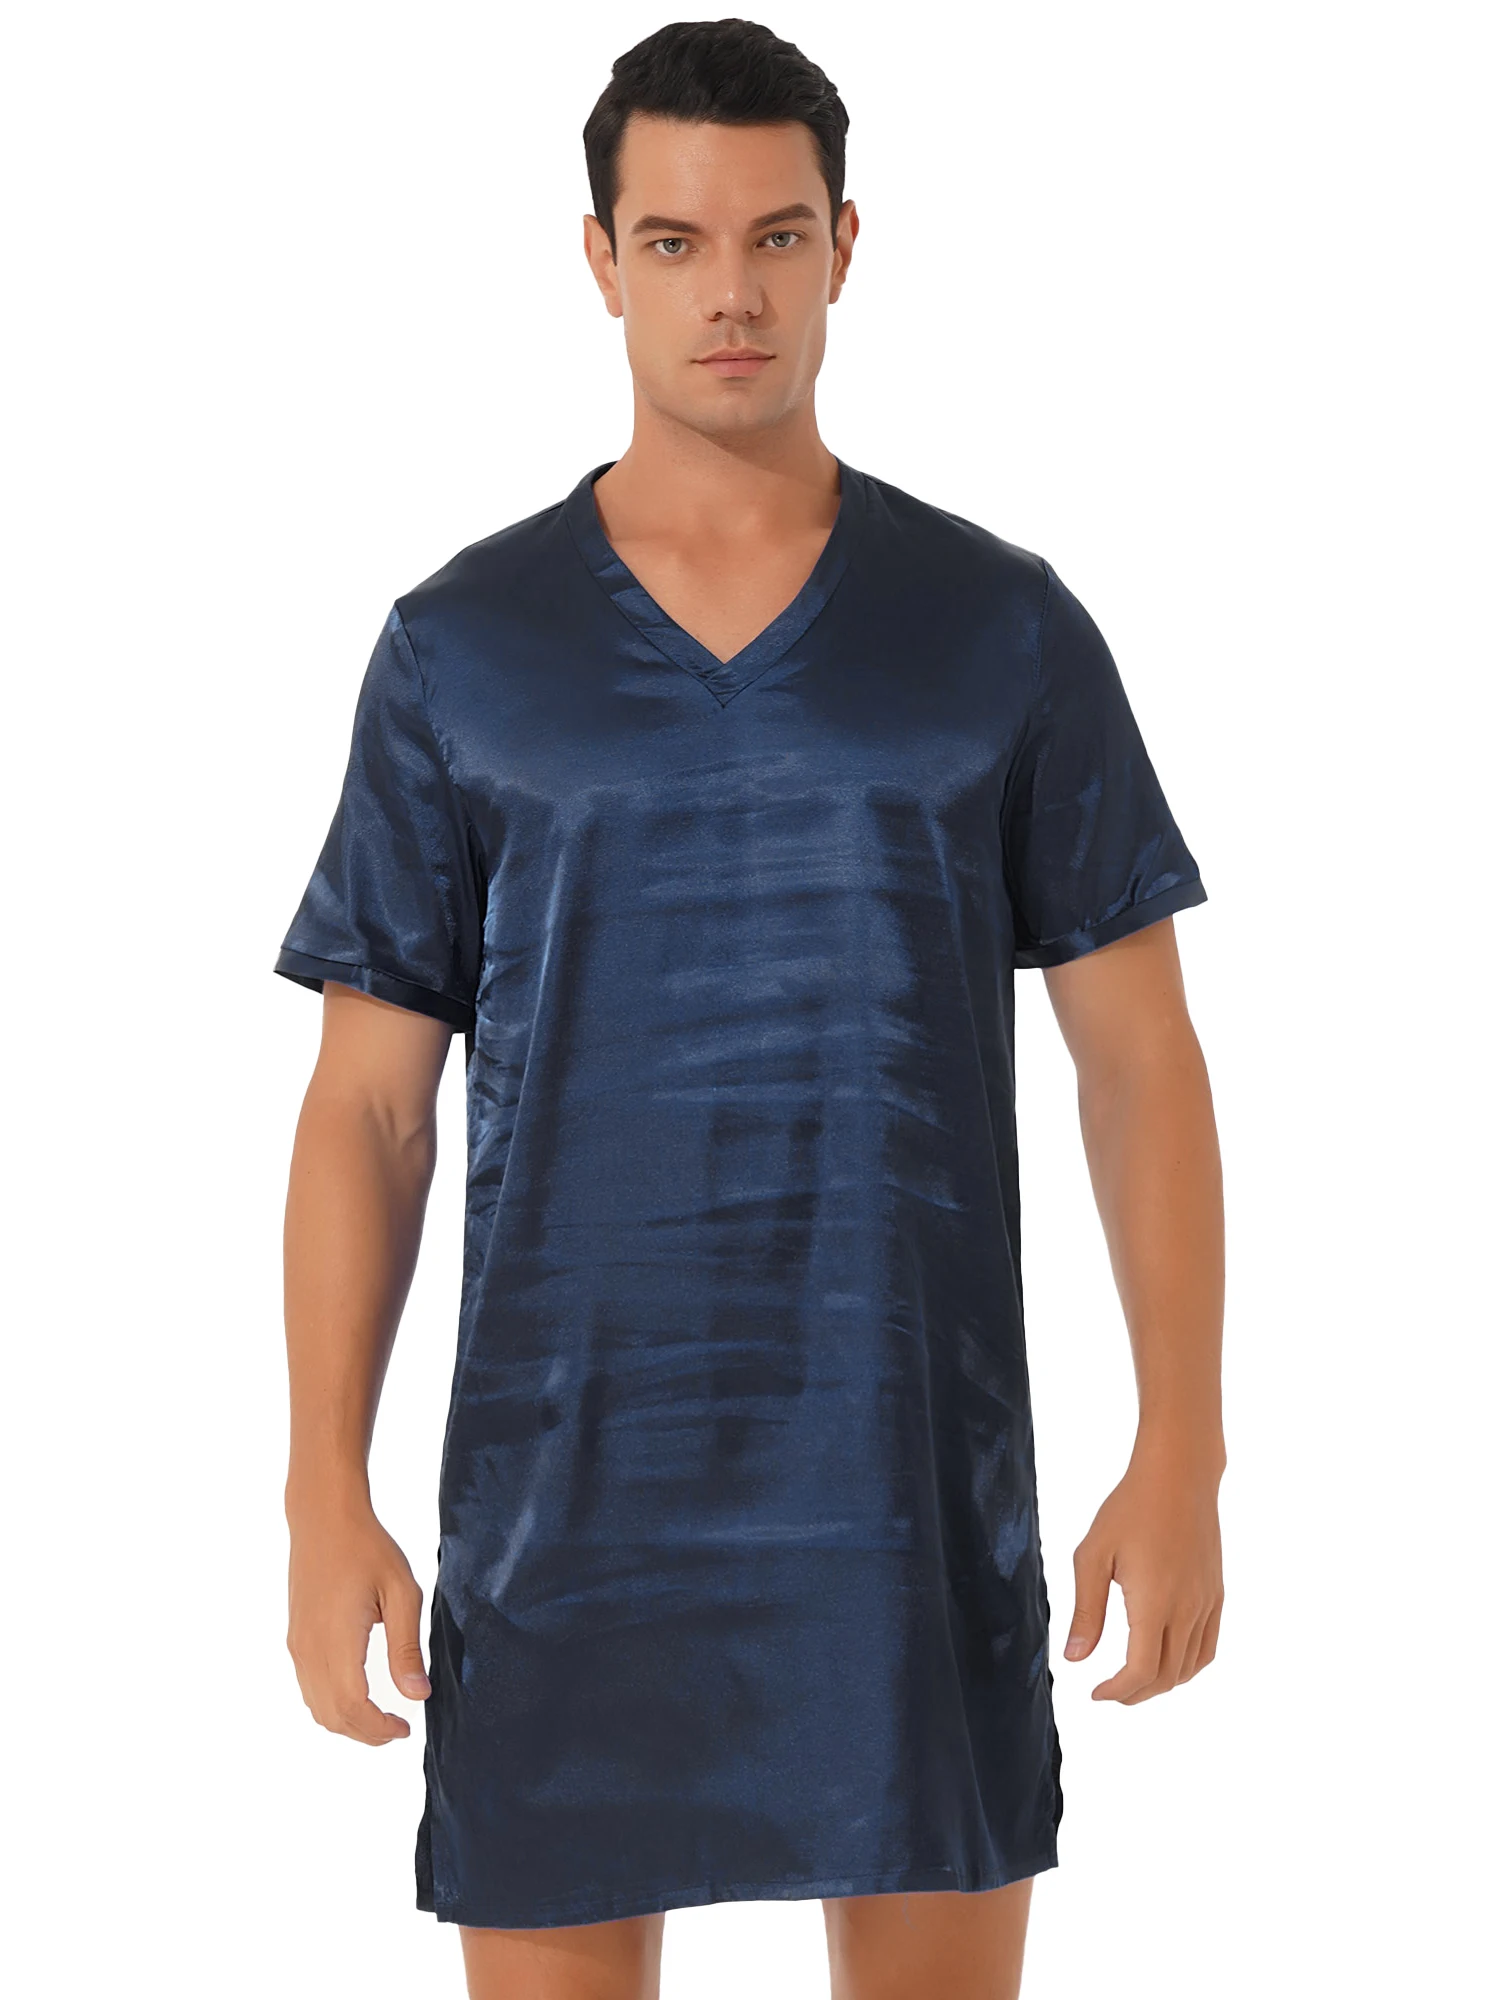 Men Women Satin Nightgown Robes V Neck Short Sleeve Sleepwear Nightclothes Homewear Sides Split Nightwear Sissy Comfort Dress mens designer pjs